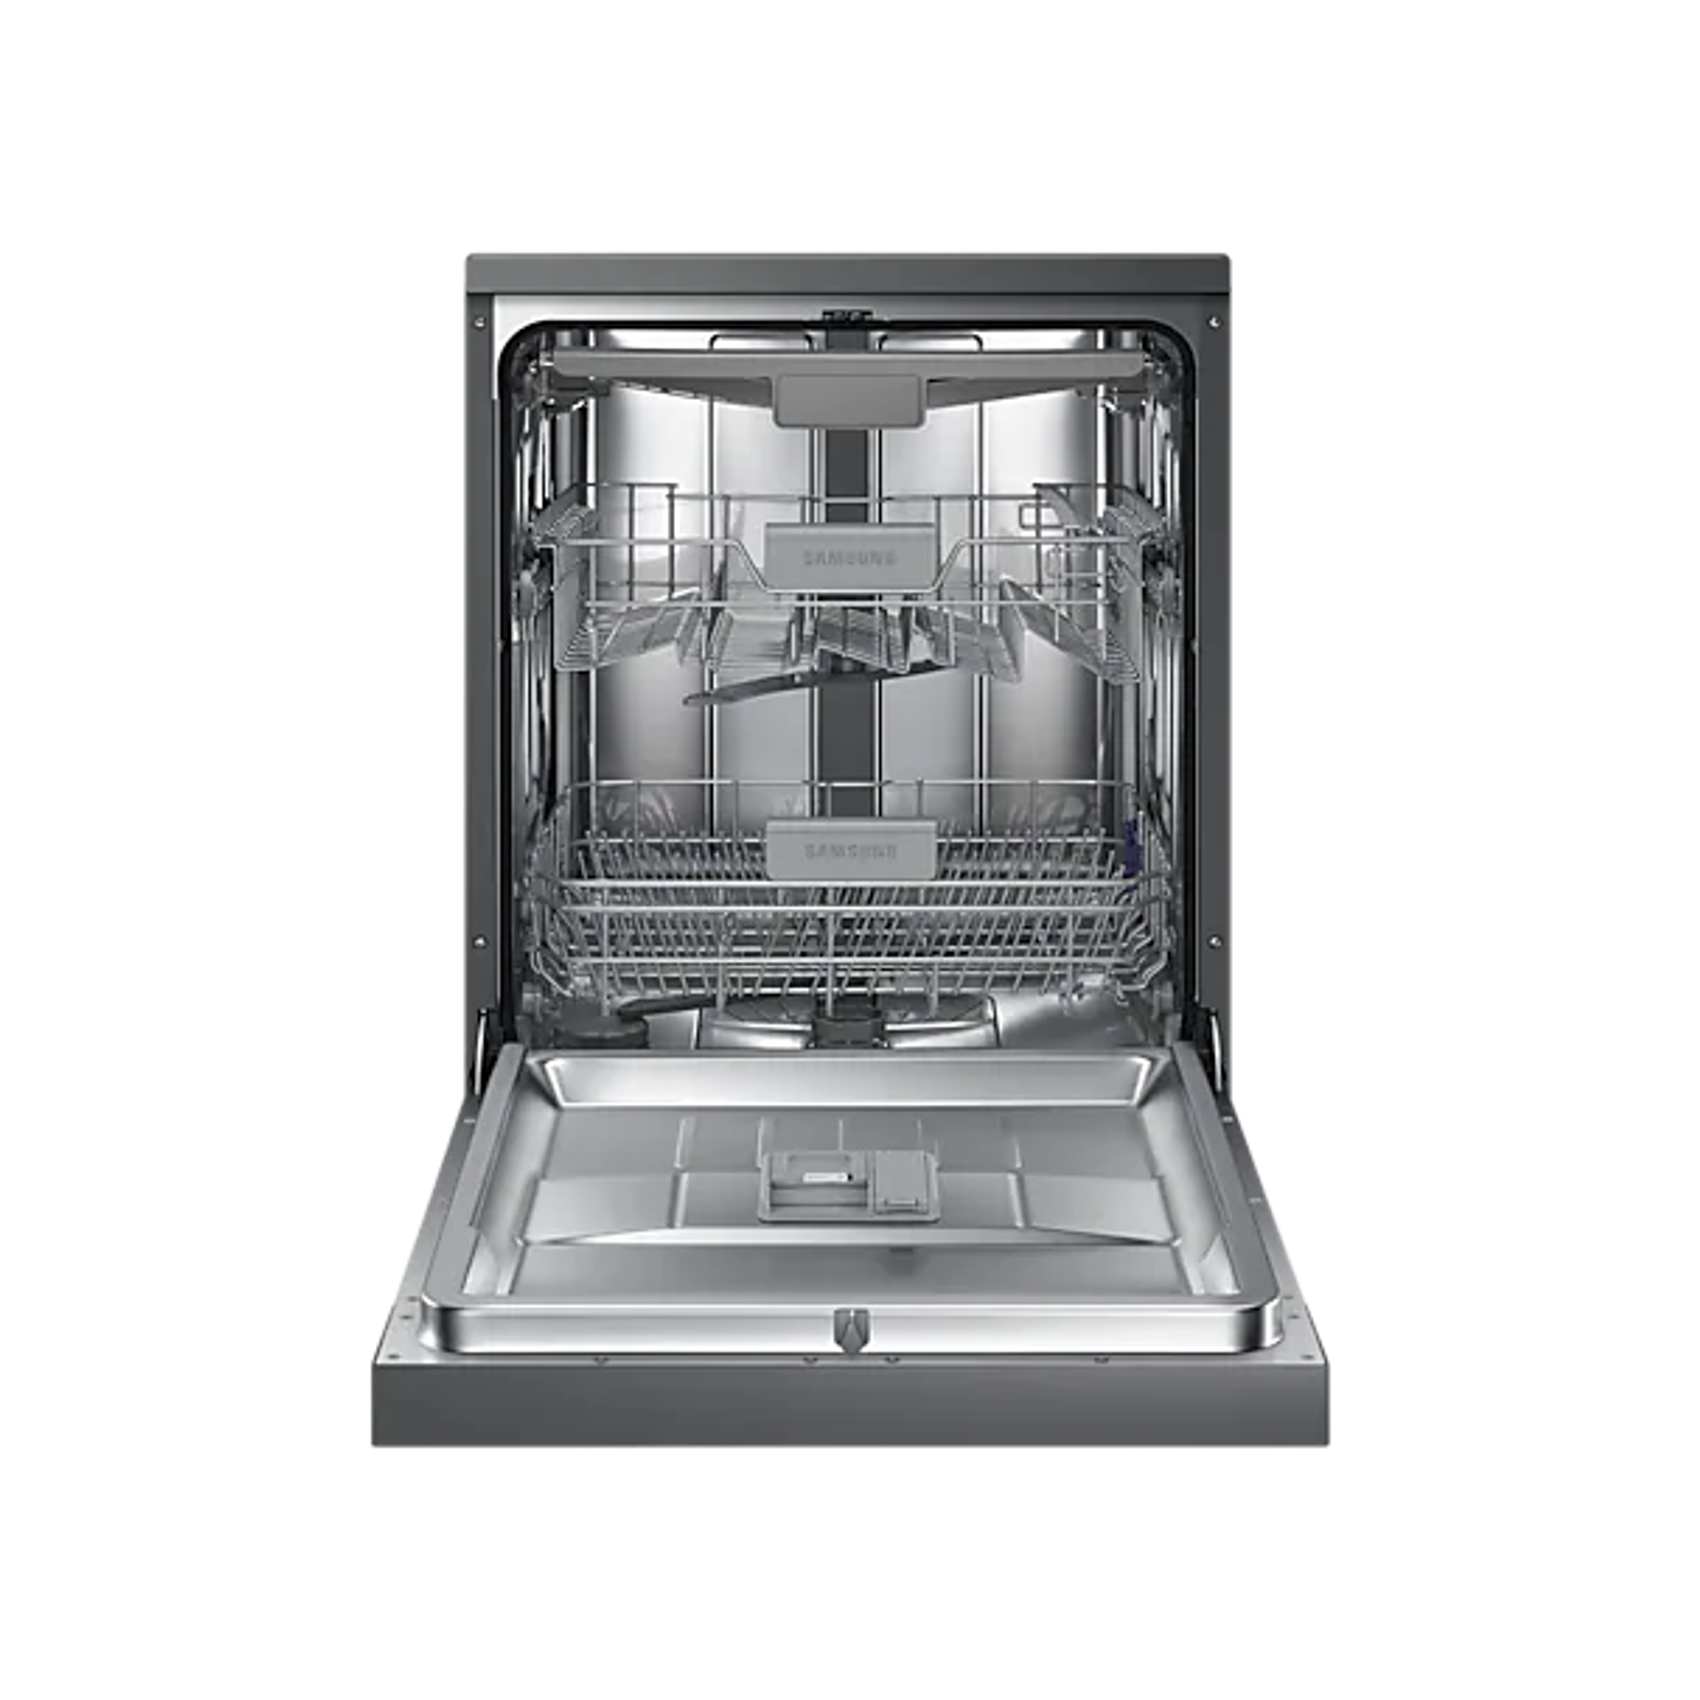 Samsung 14 Place Setting Dishwasher - Black Stainless Steel (Photo: 5)